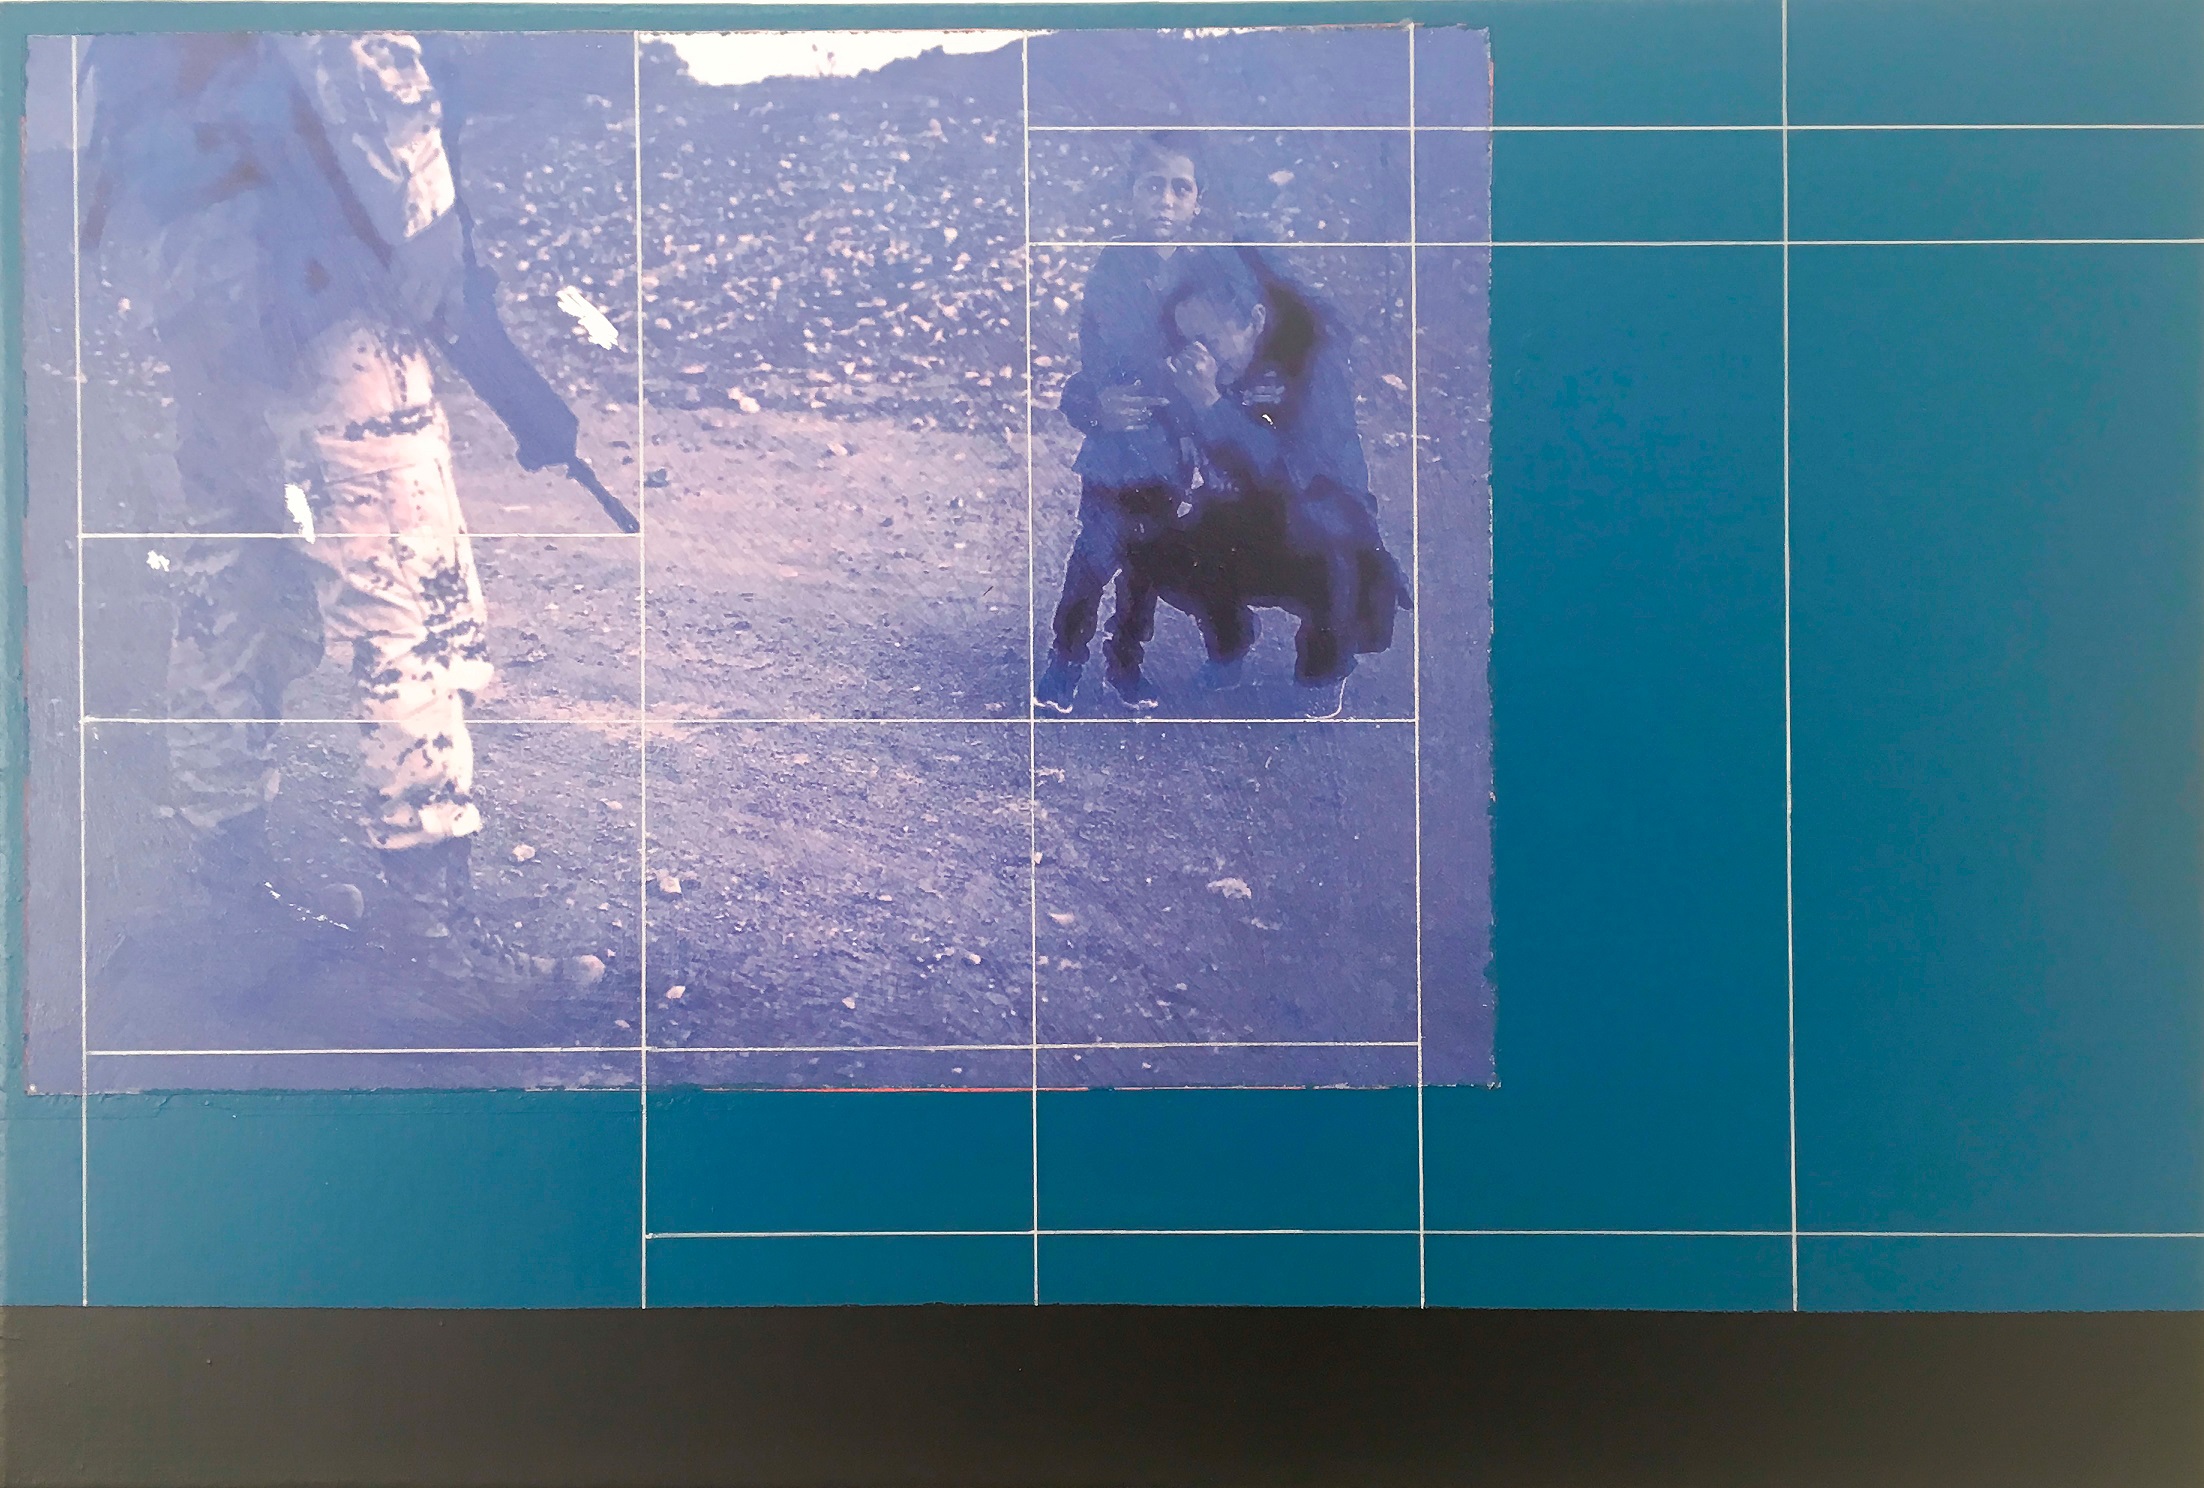 Diego Castro, Front0219 - Série Front, Transferência fotográfica, tinta acrílica sobre tela, 40 X 60 cm, 2019